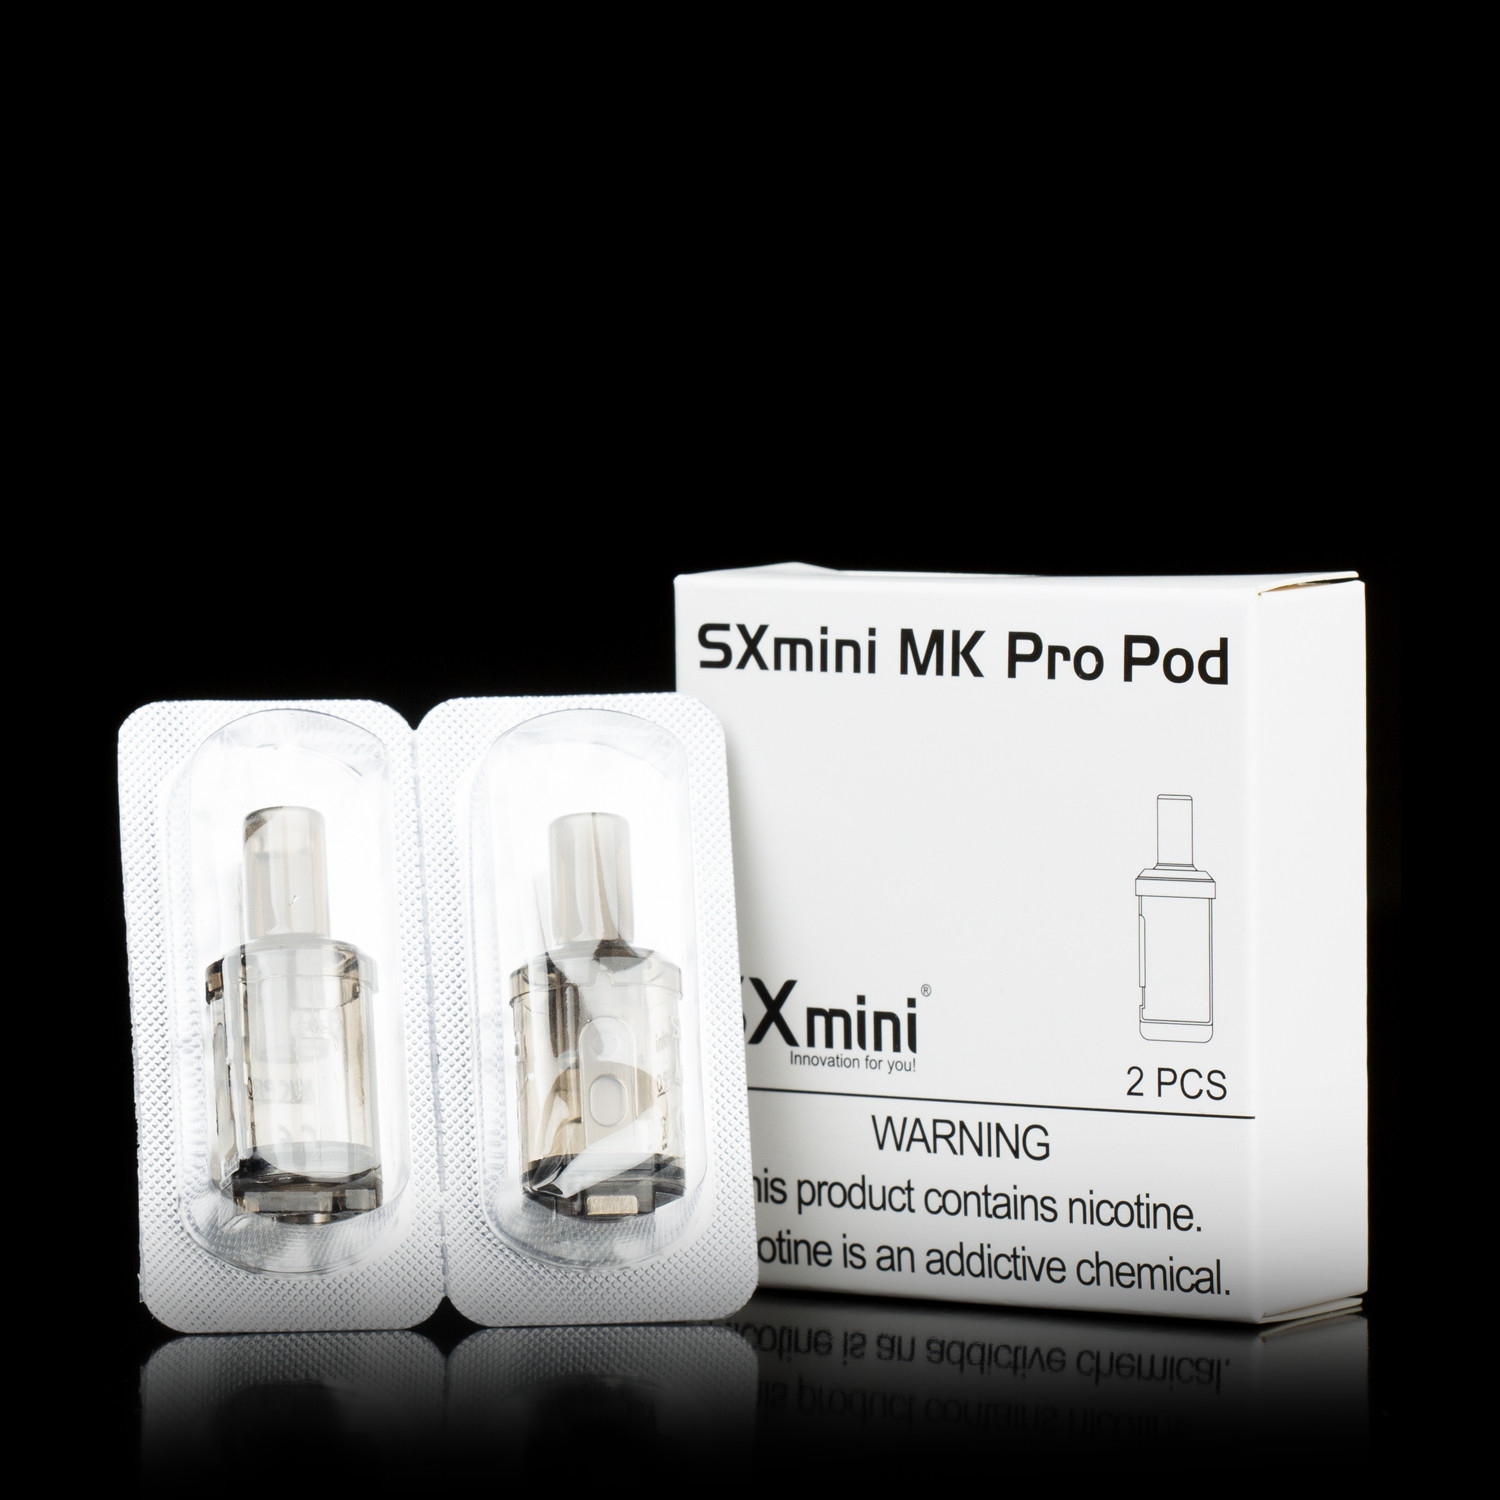 Replacement pods/cartridges SXmini MK Pro